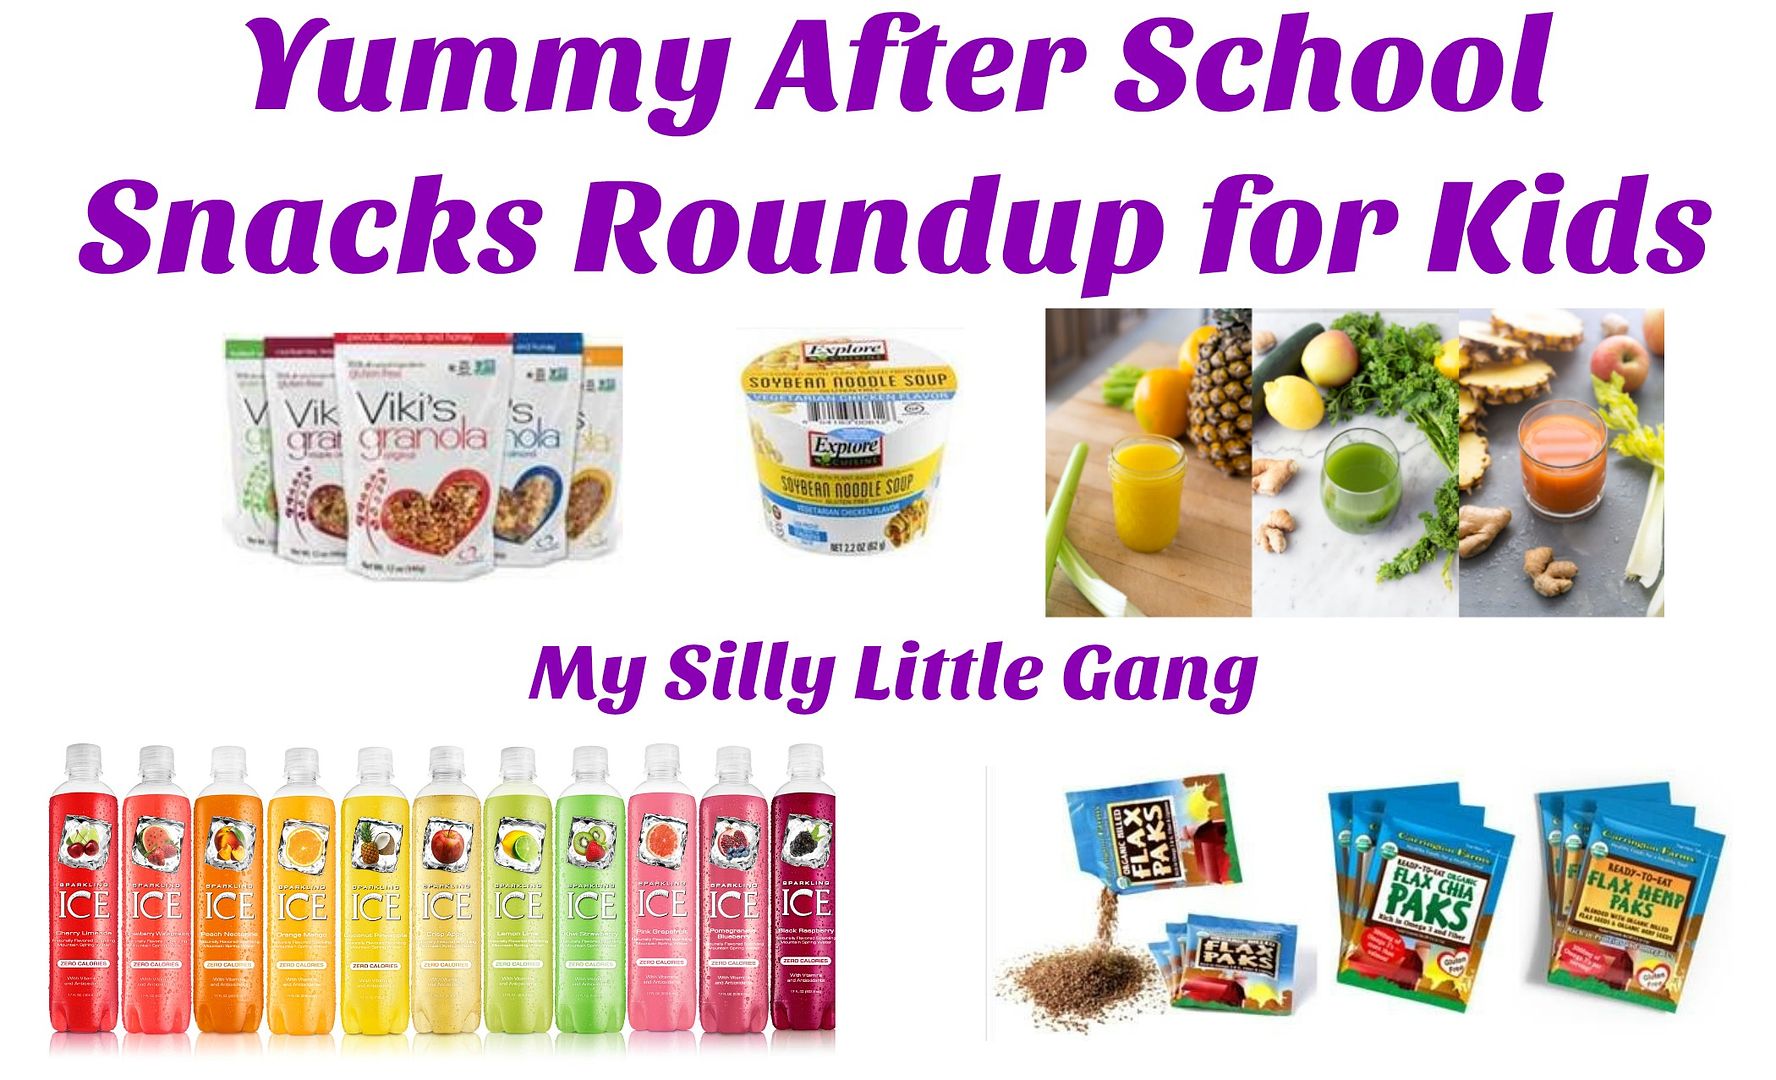 snacks roundup